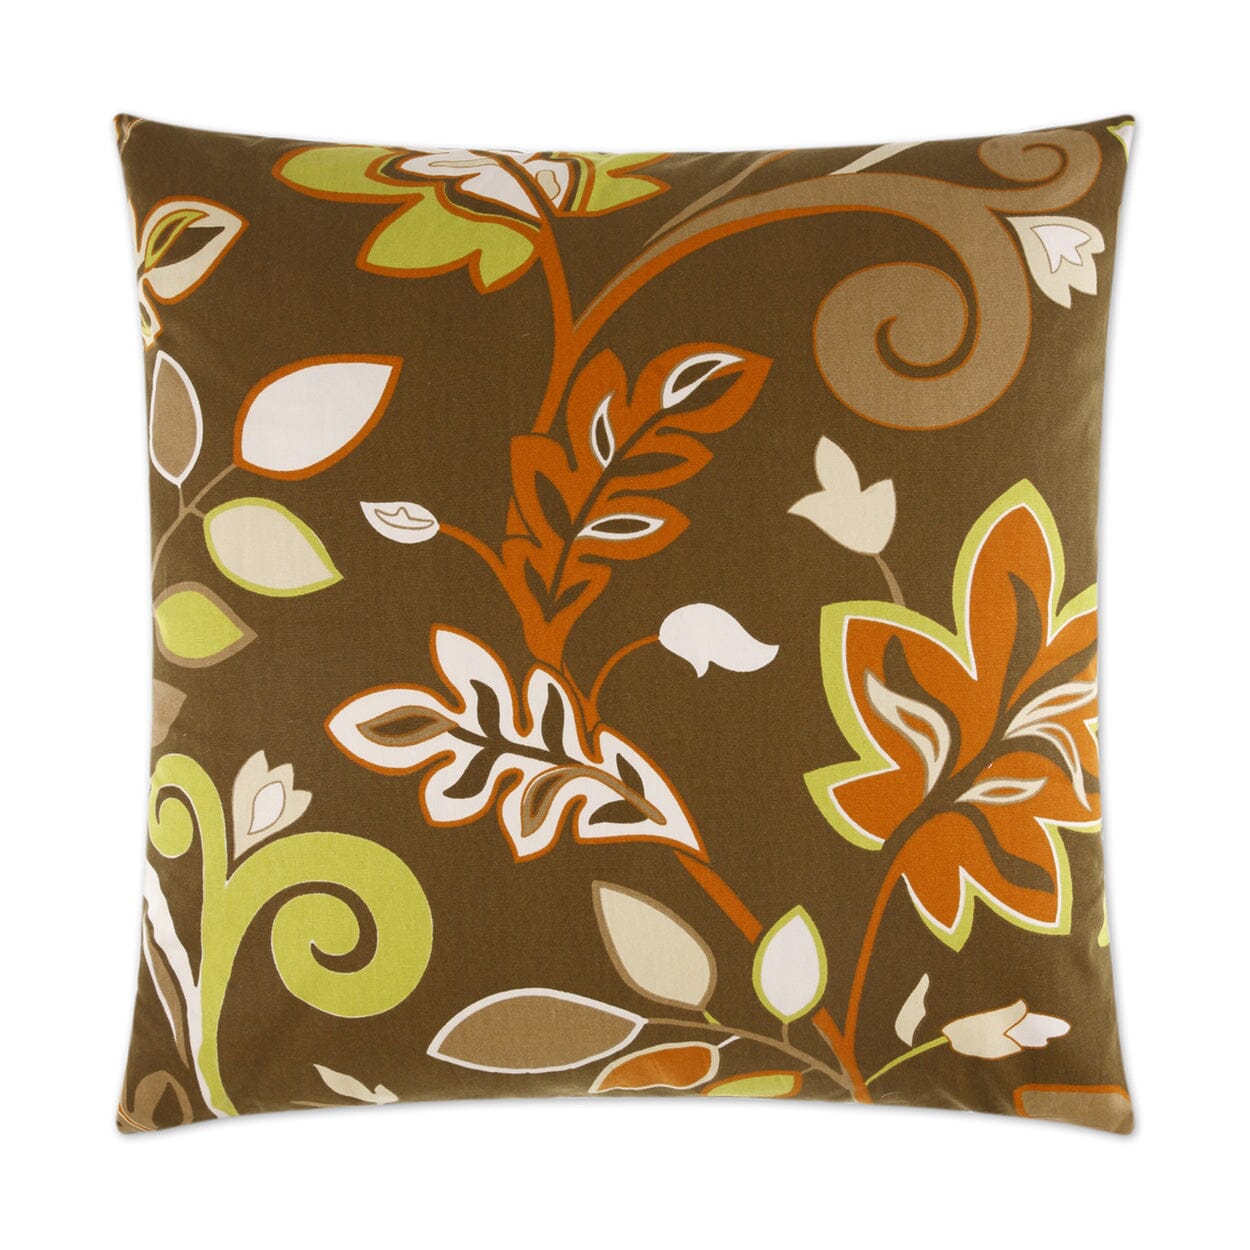 D.V. Kap Charisma Decorative Throw Pillow | Brown Pillows D.V Kap Home